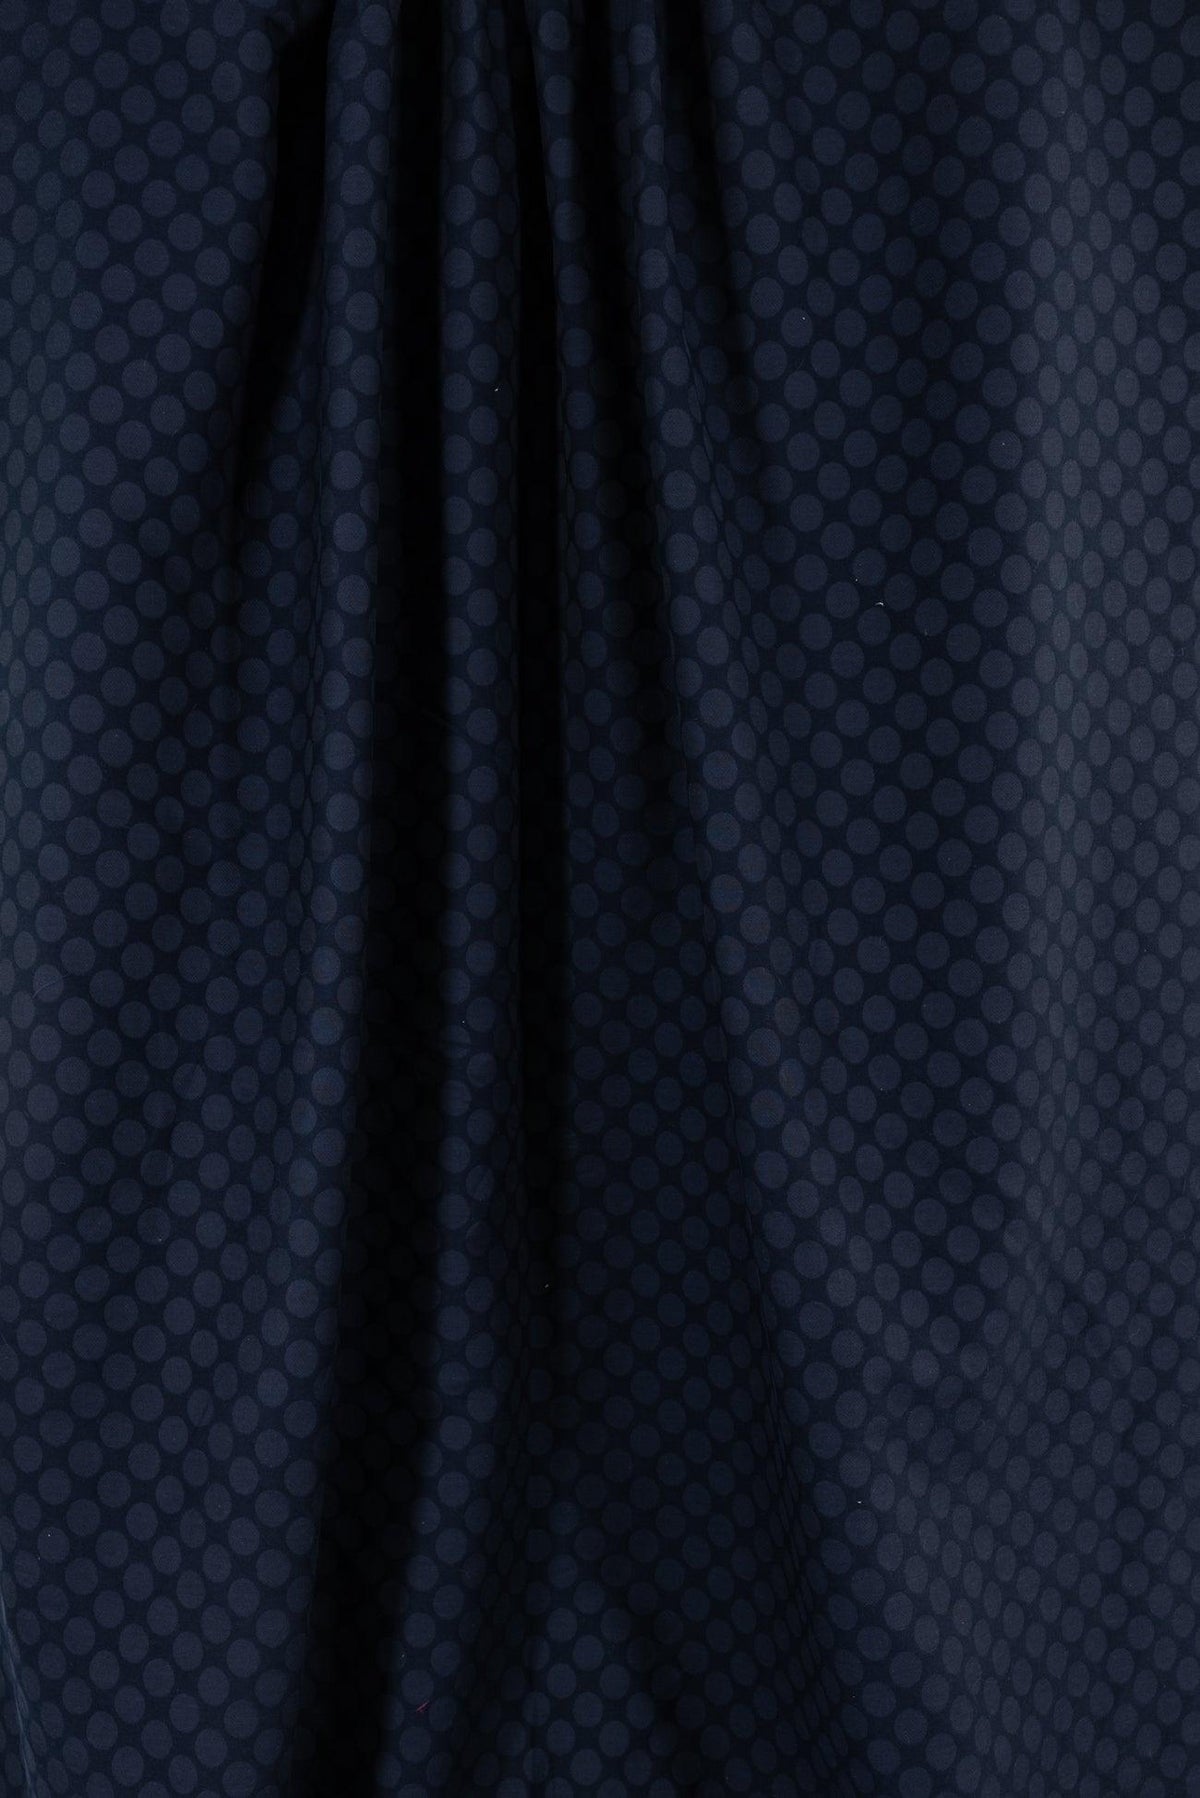 Blue On Blue Dot Italian Jacquard Woven - Marcy Tilton Fabrics